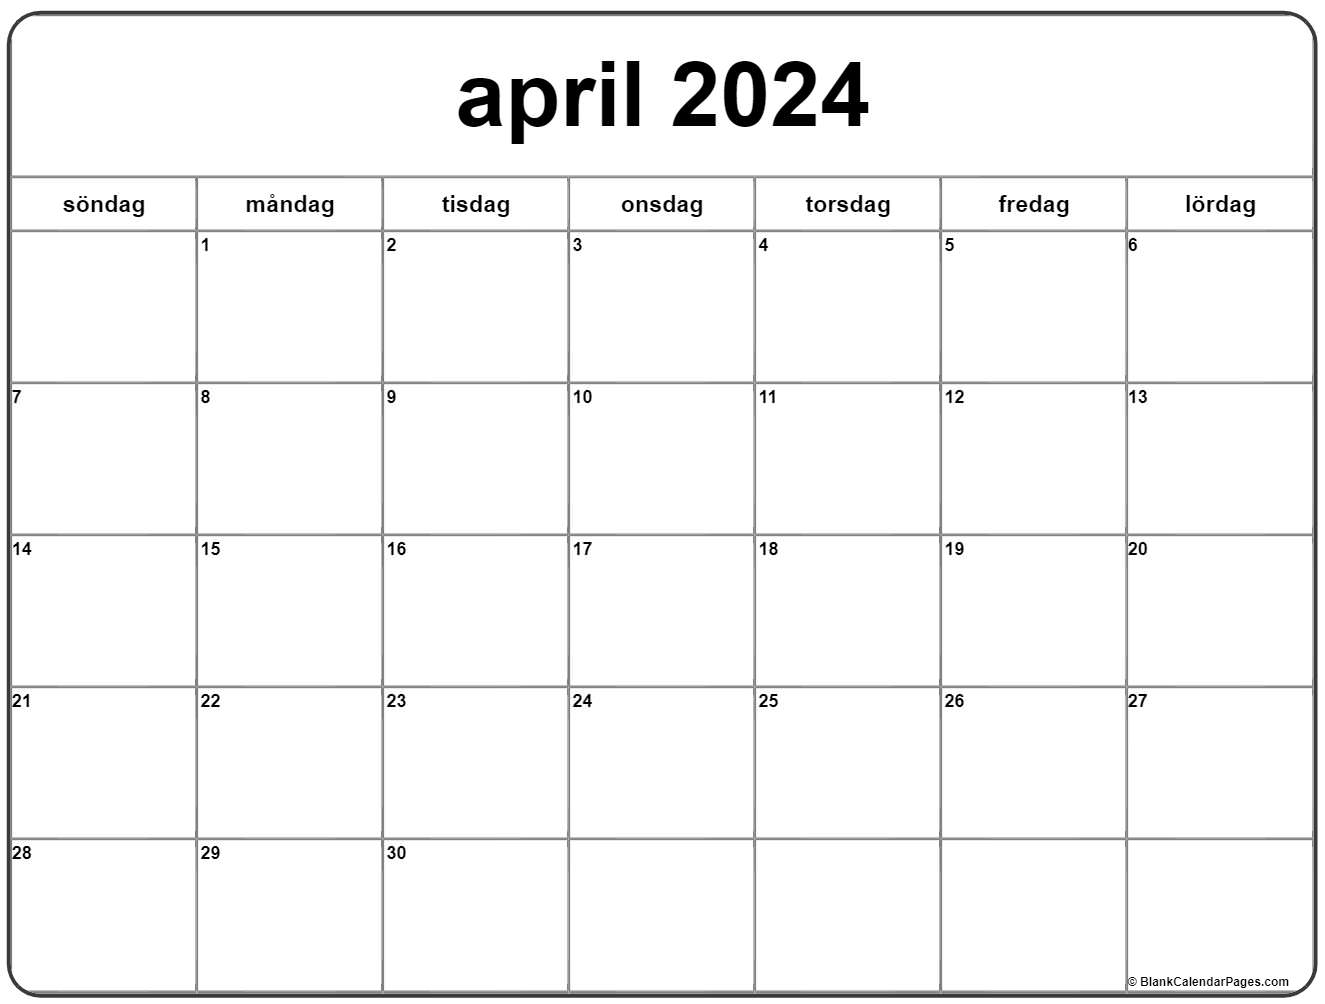 April 2021 Kalender Svenska Kalender April